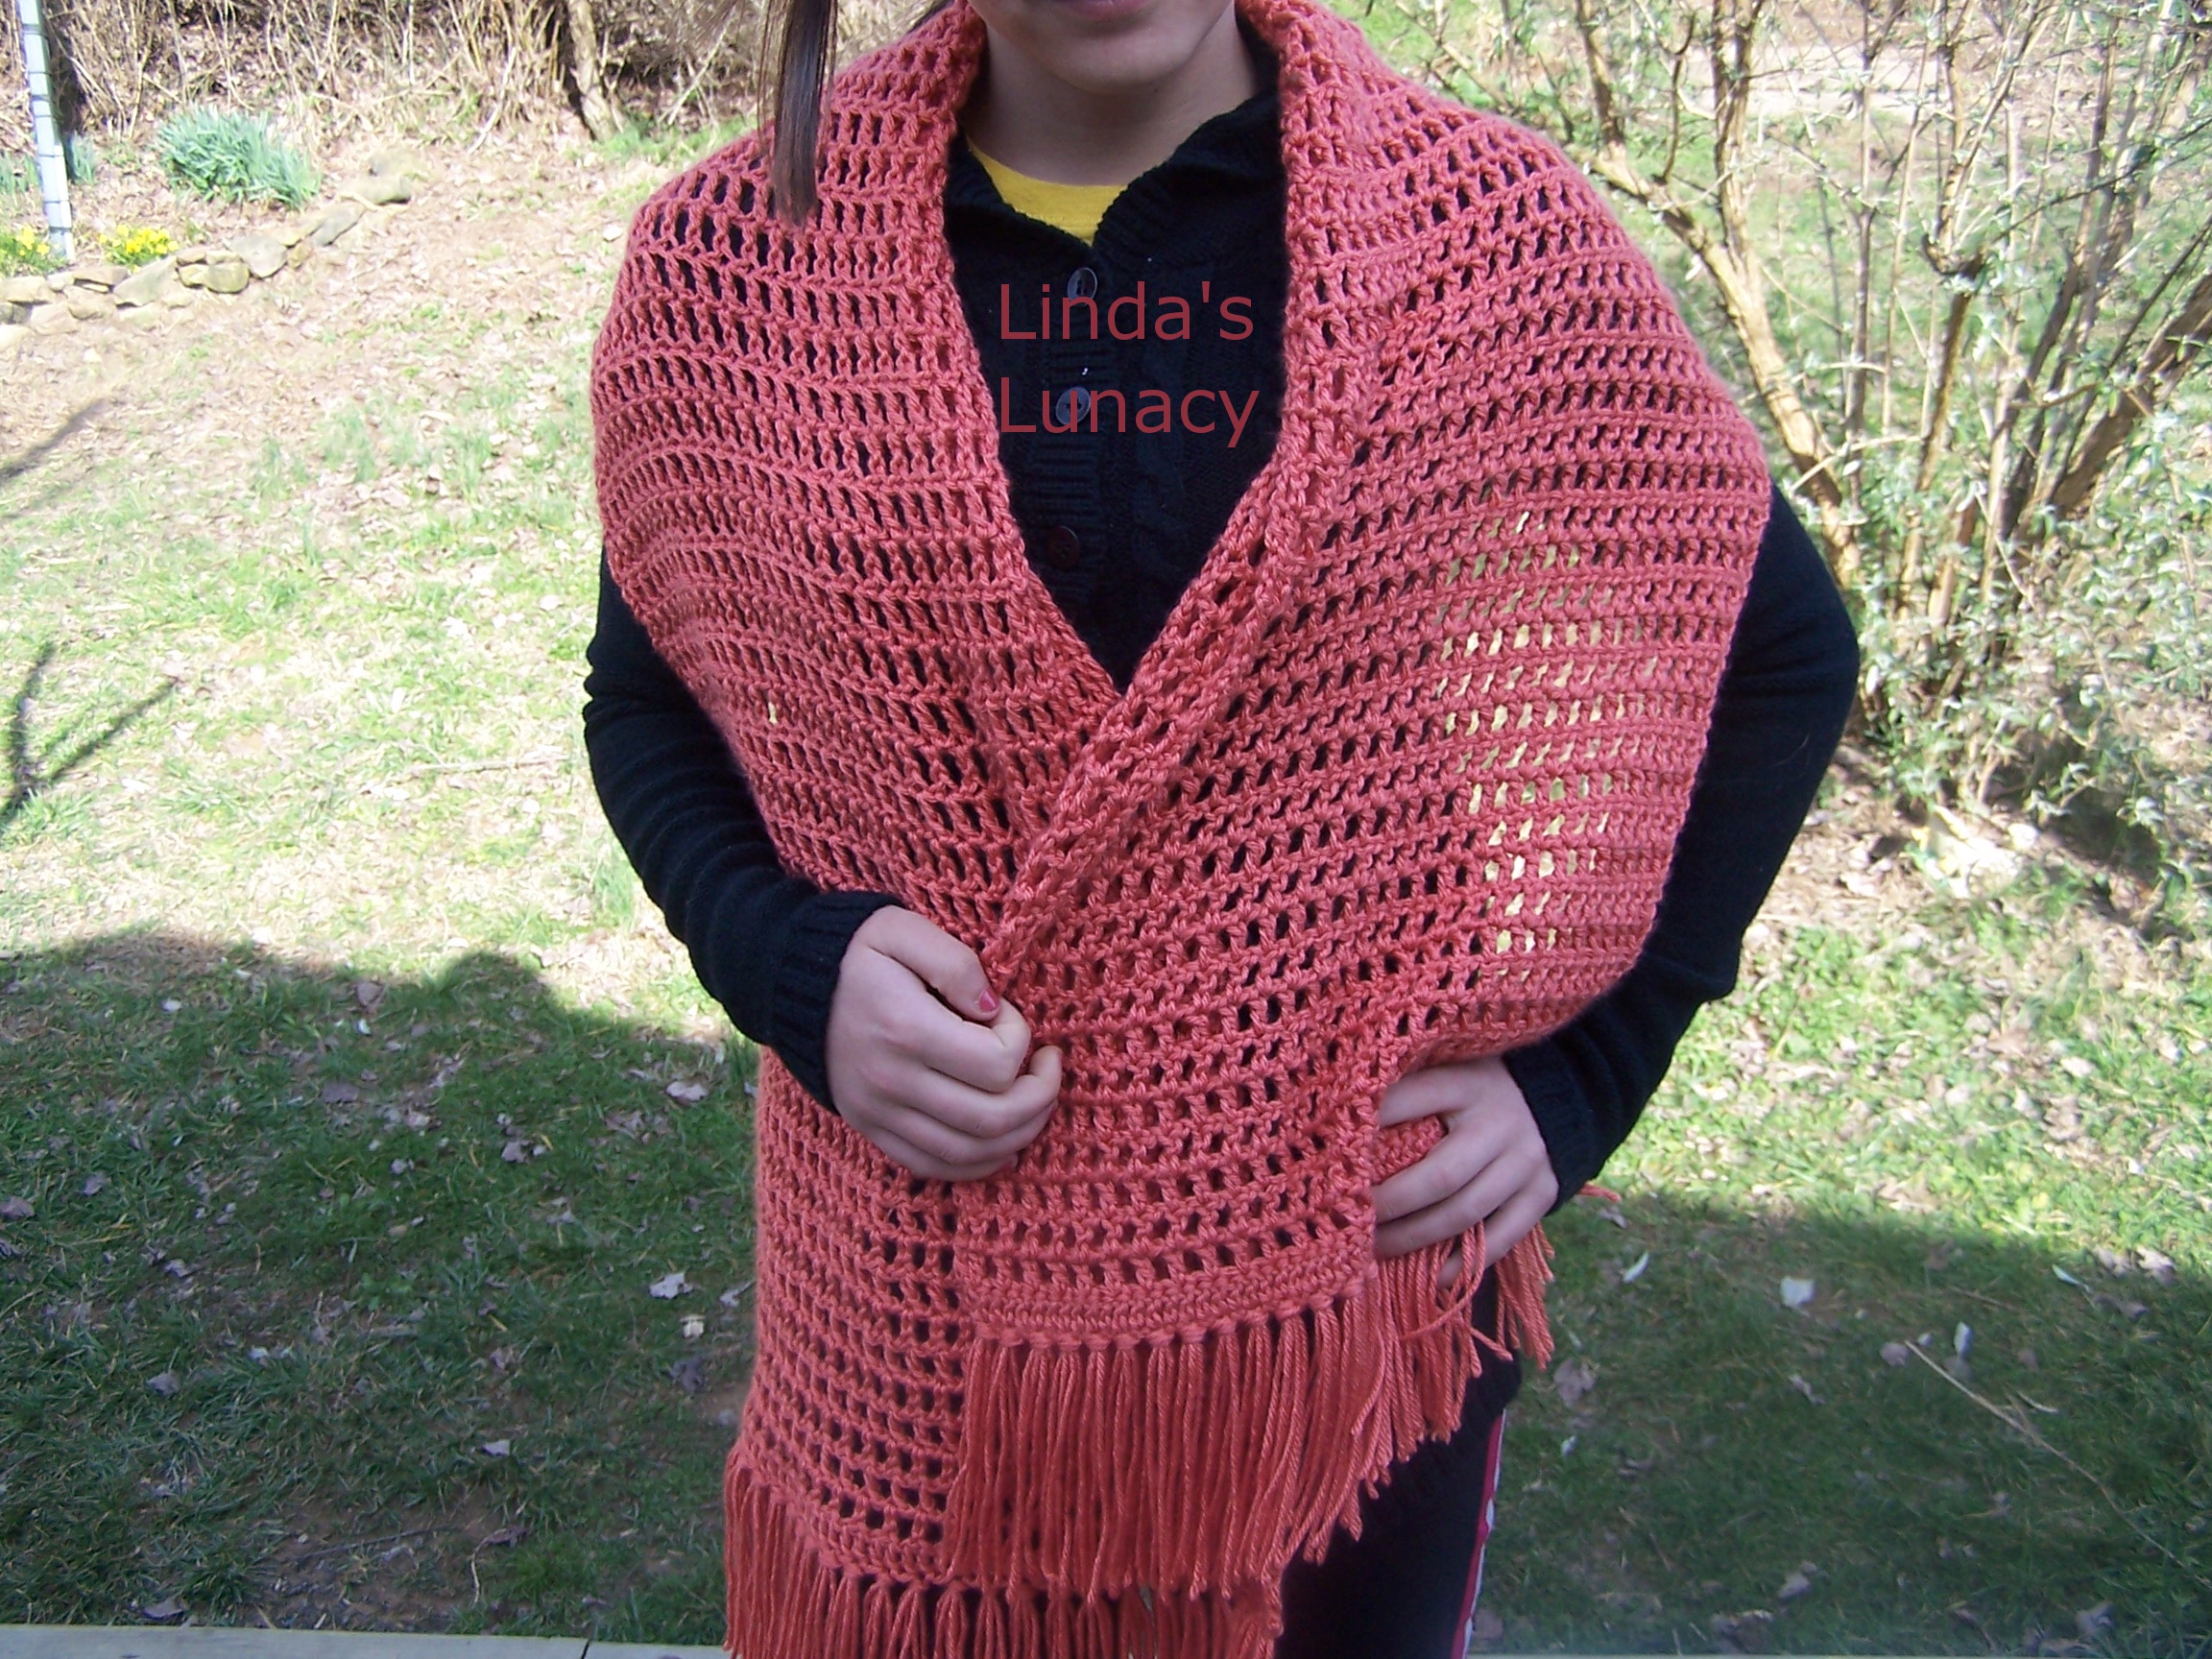 crocheted-prayer-shawl-linda-s-lunacy